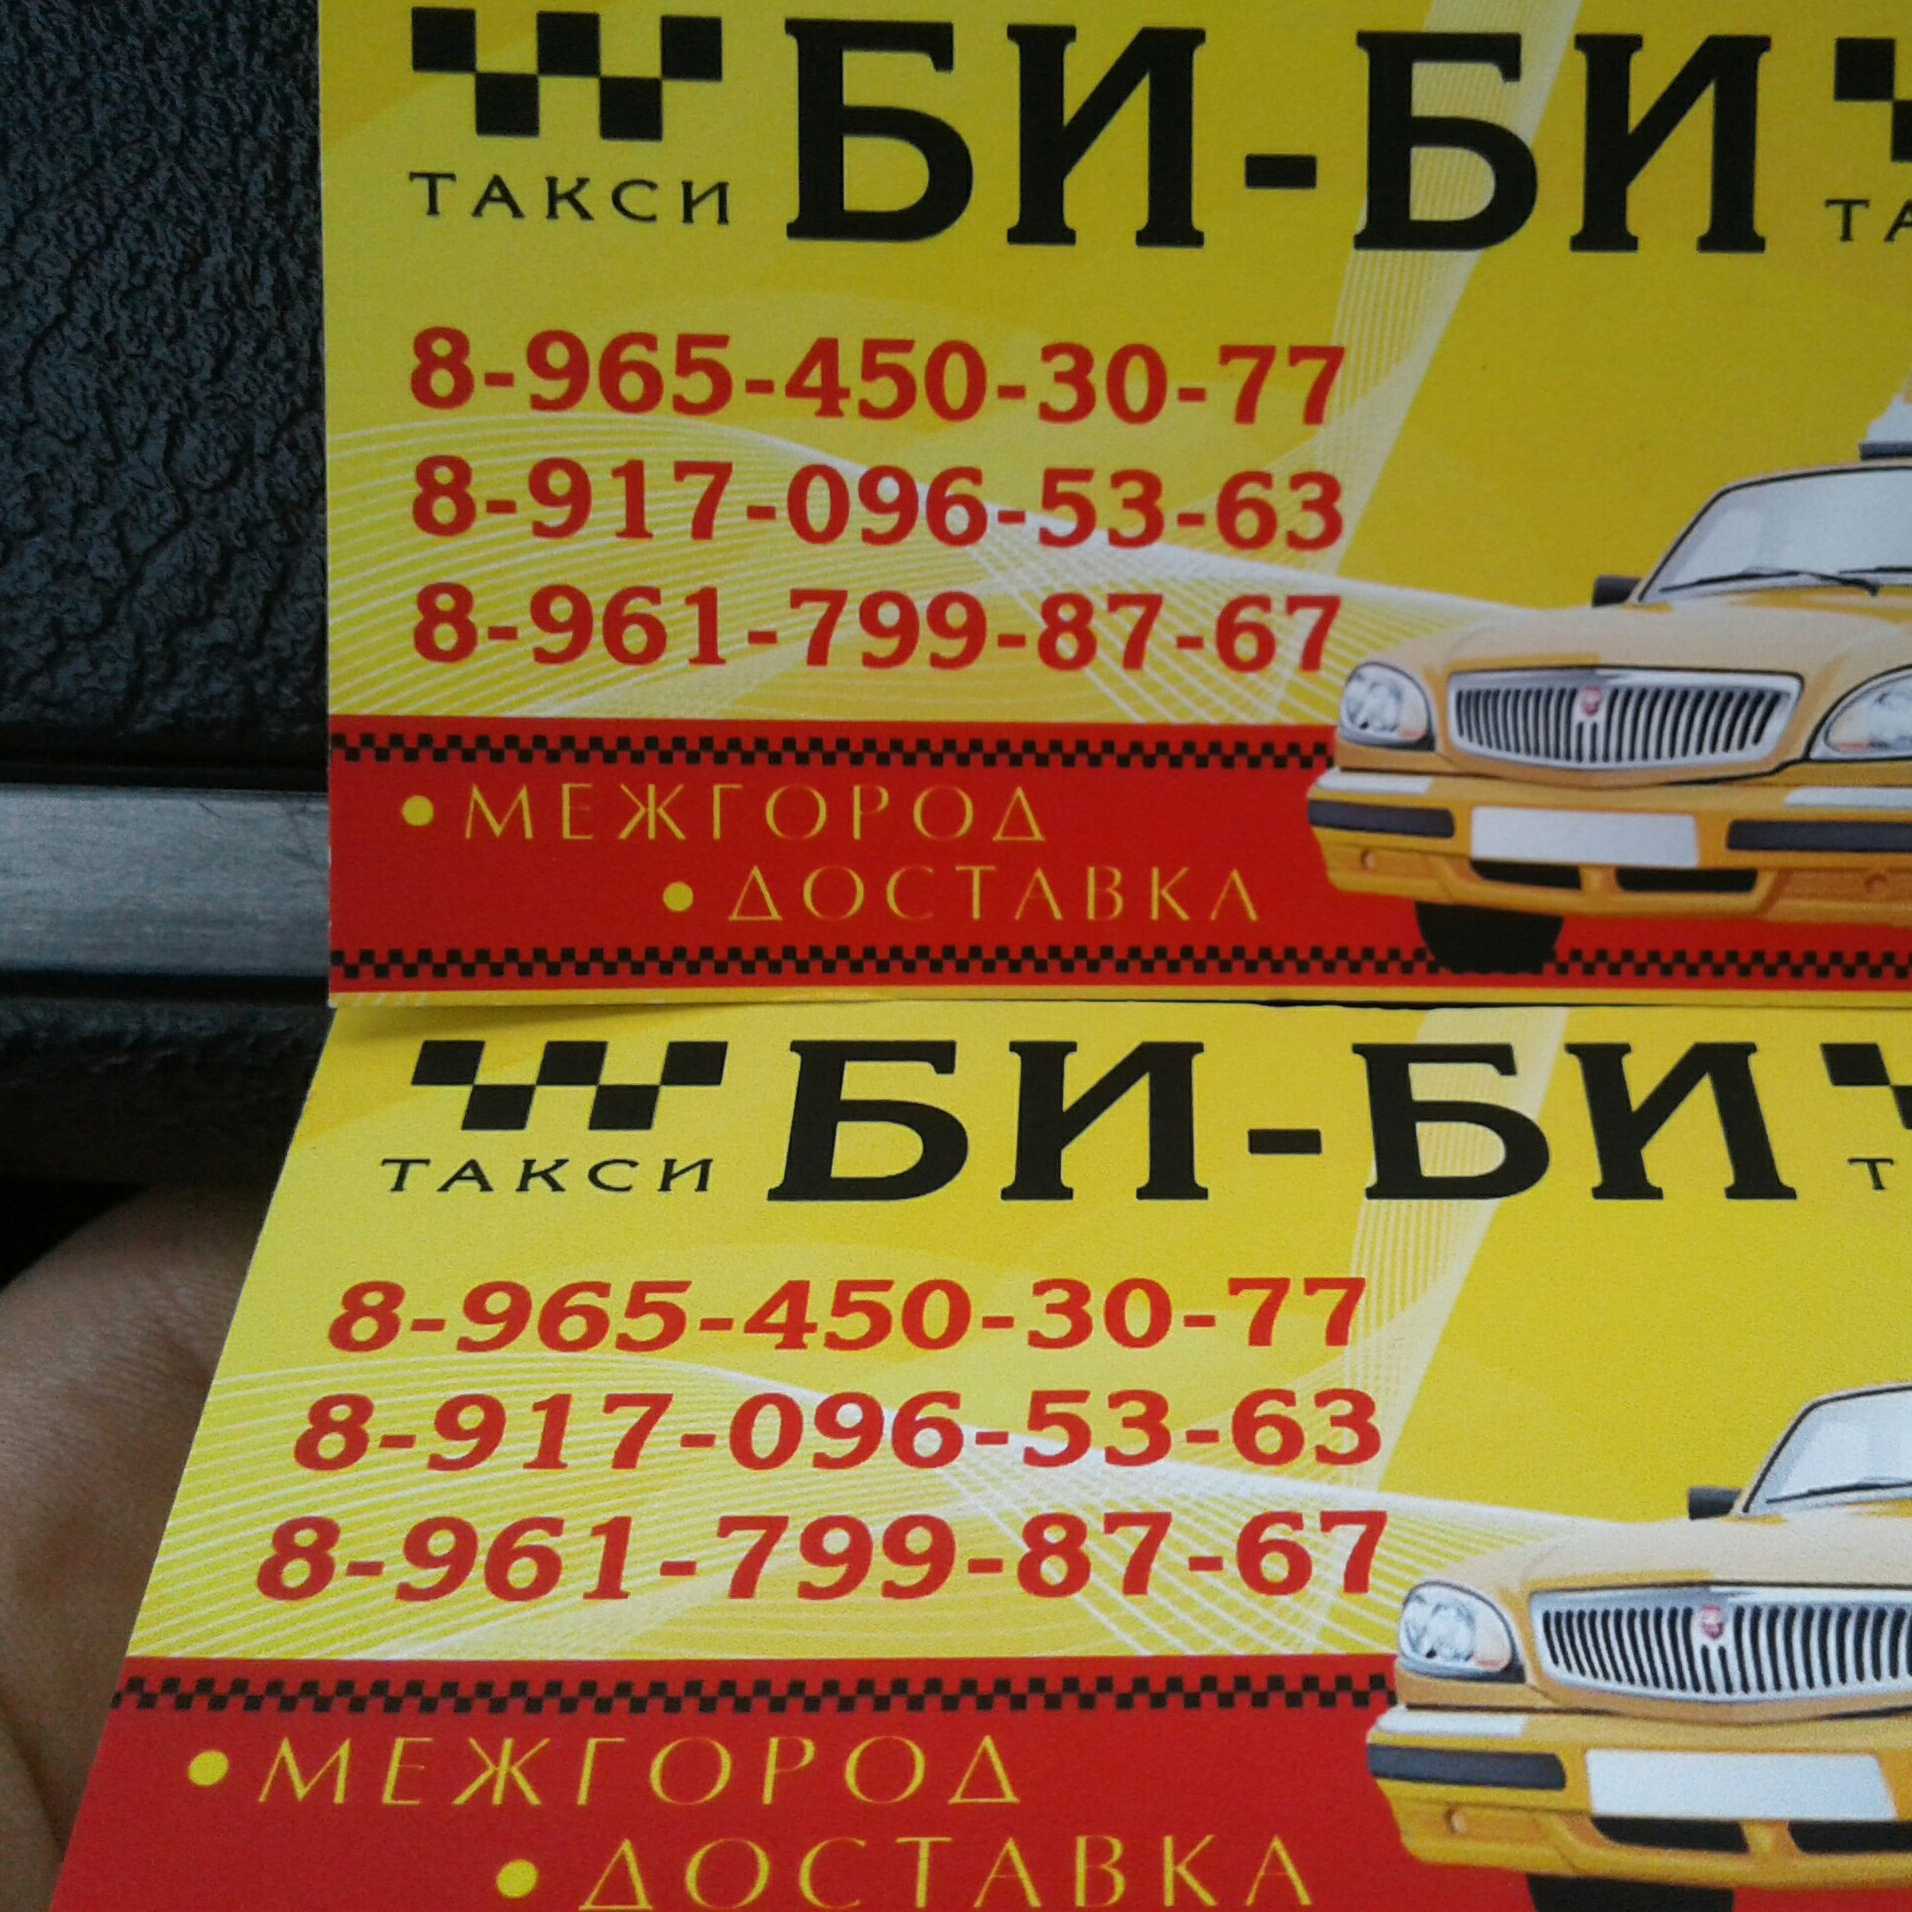 Телефоны такси города красноярска. Би би такси. Такси би би Слюдянка. Таксибэ. Такси Биби Лесосибирск.